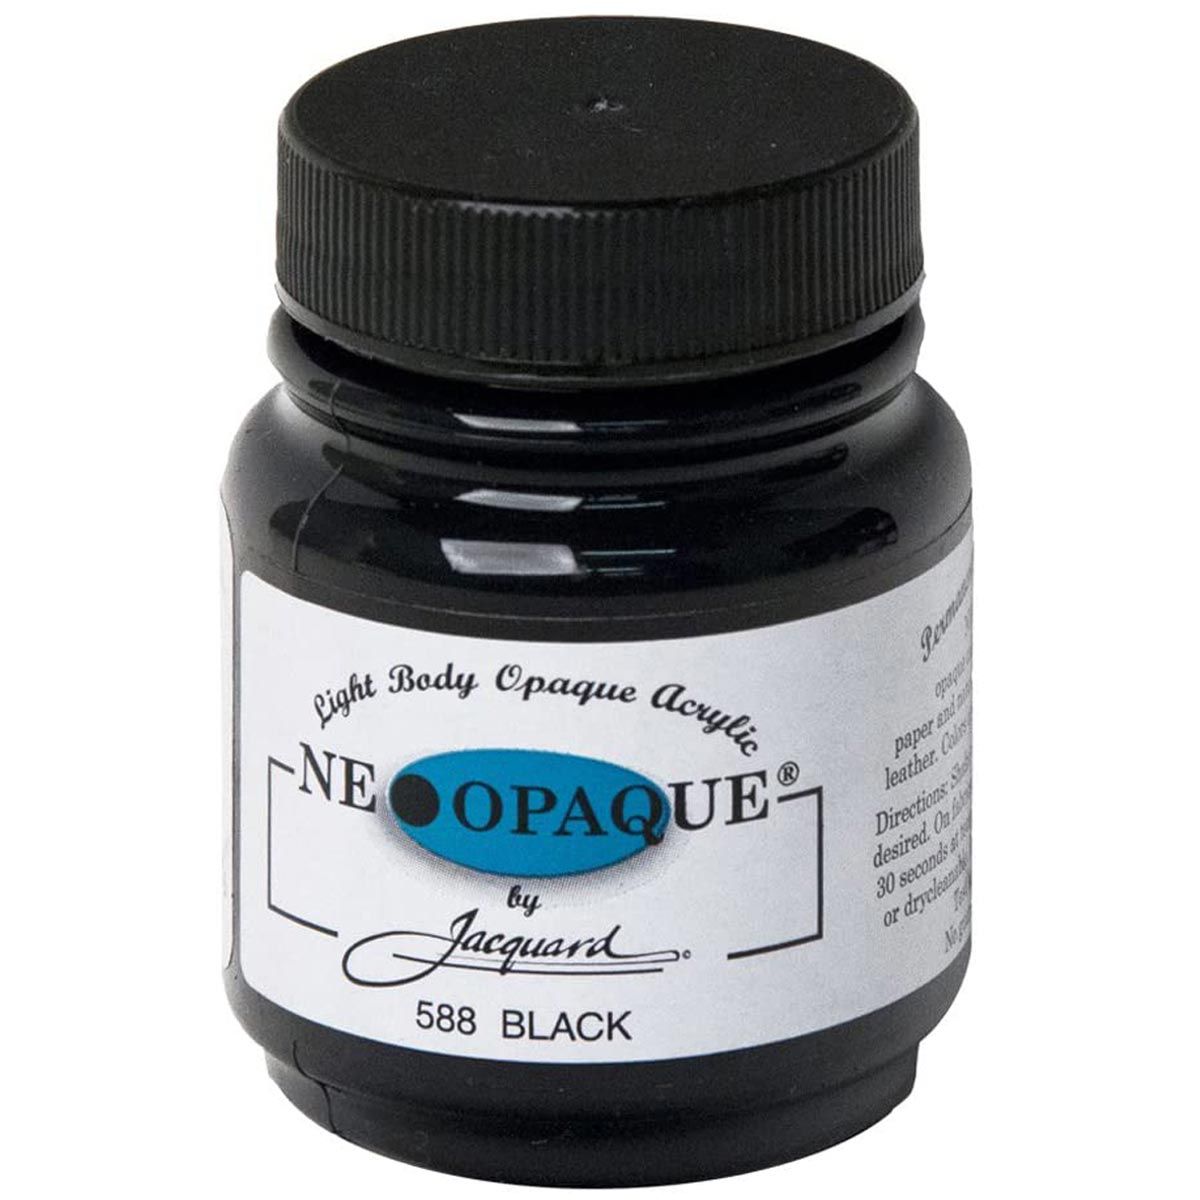 Jacquard Neopaque Acrylic 588 Black 2.25 oz